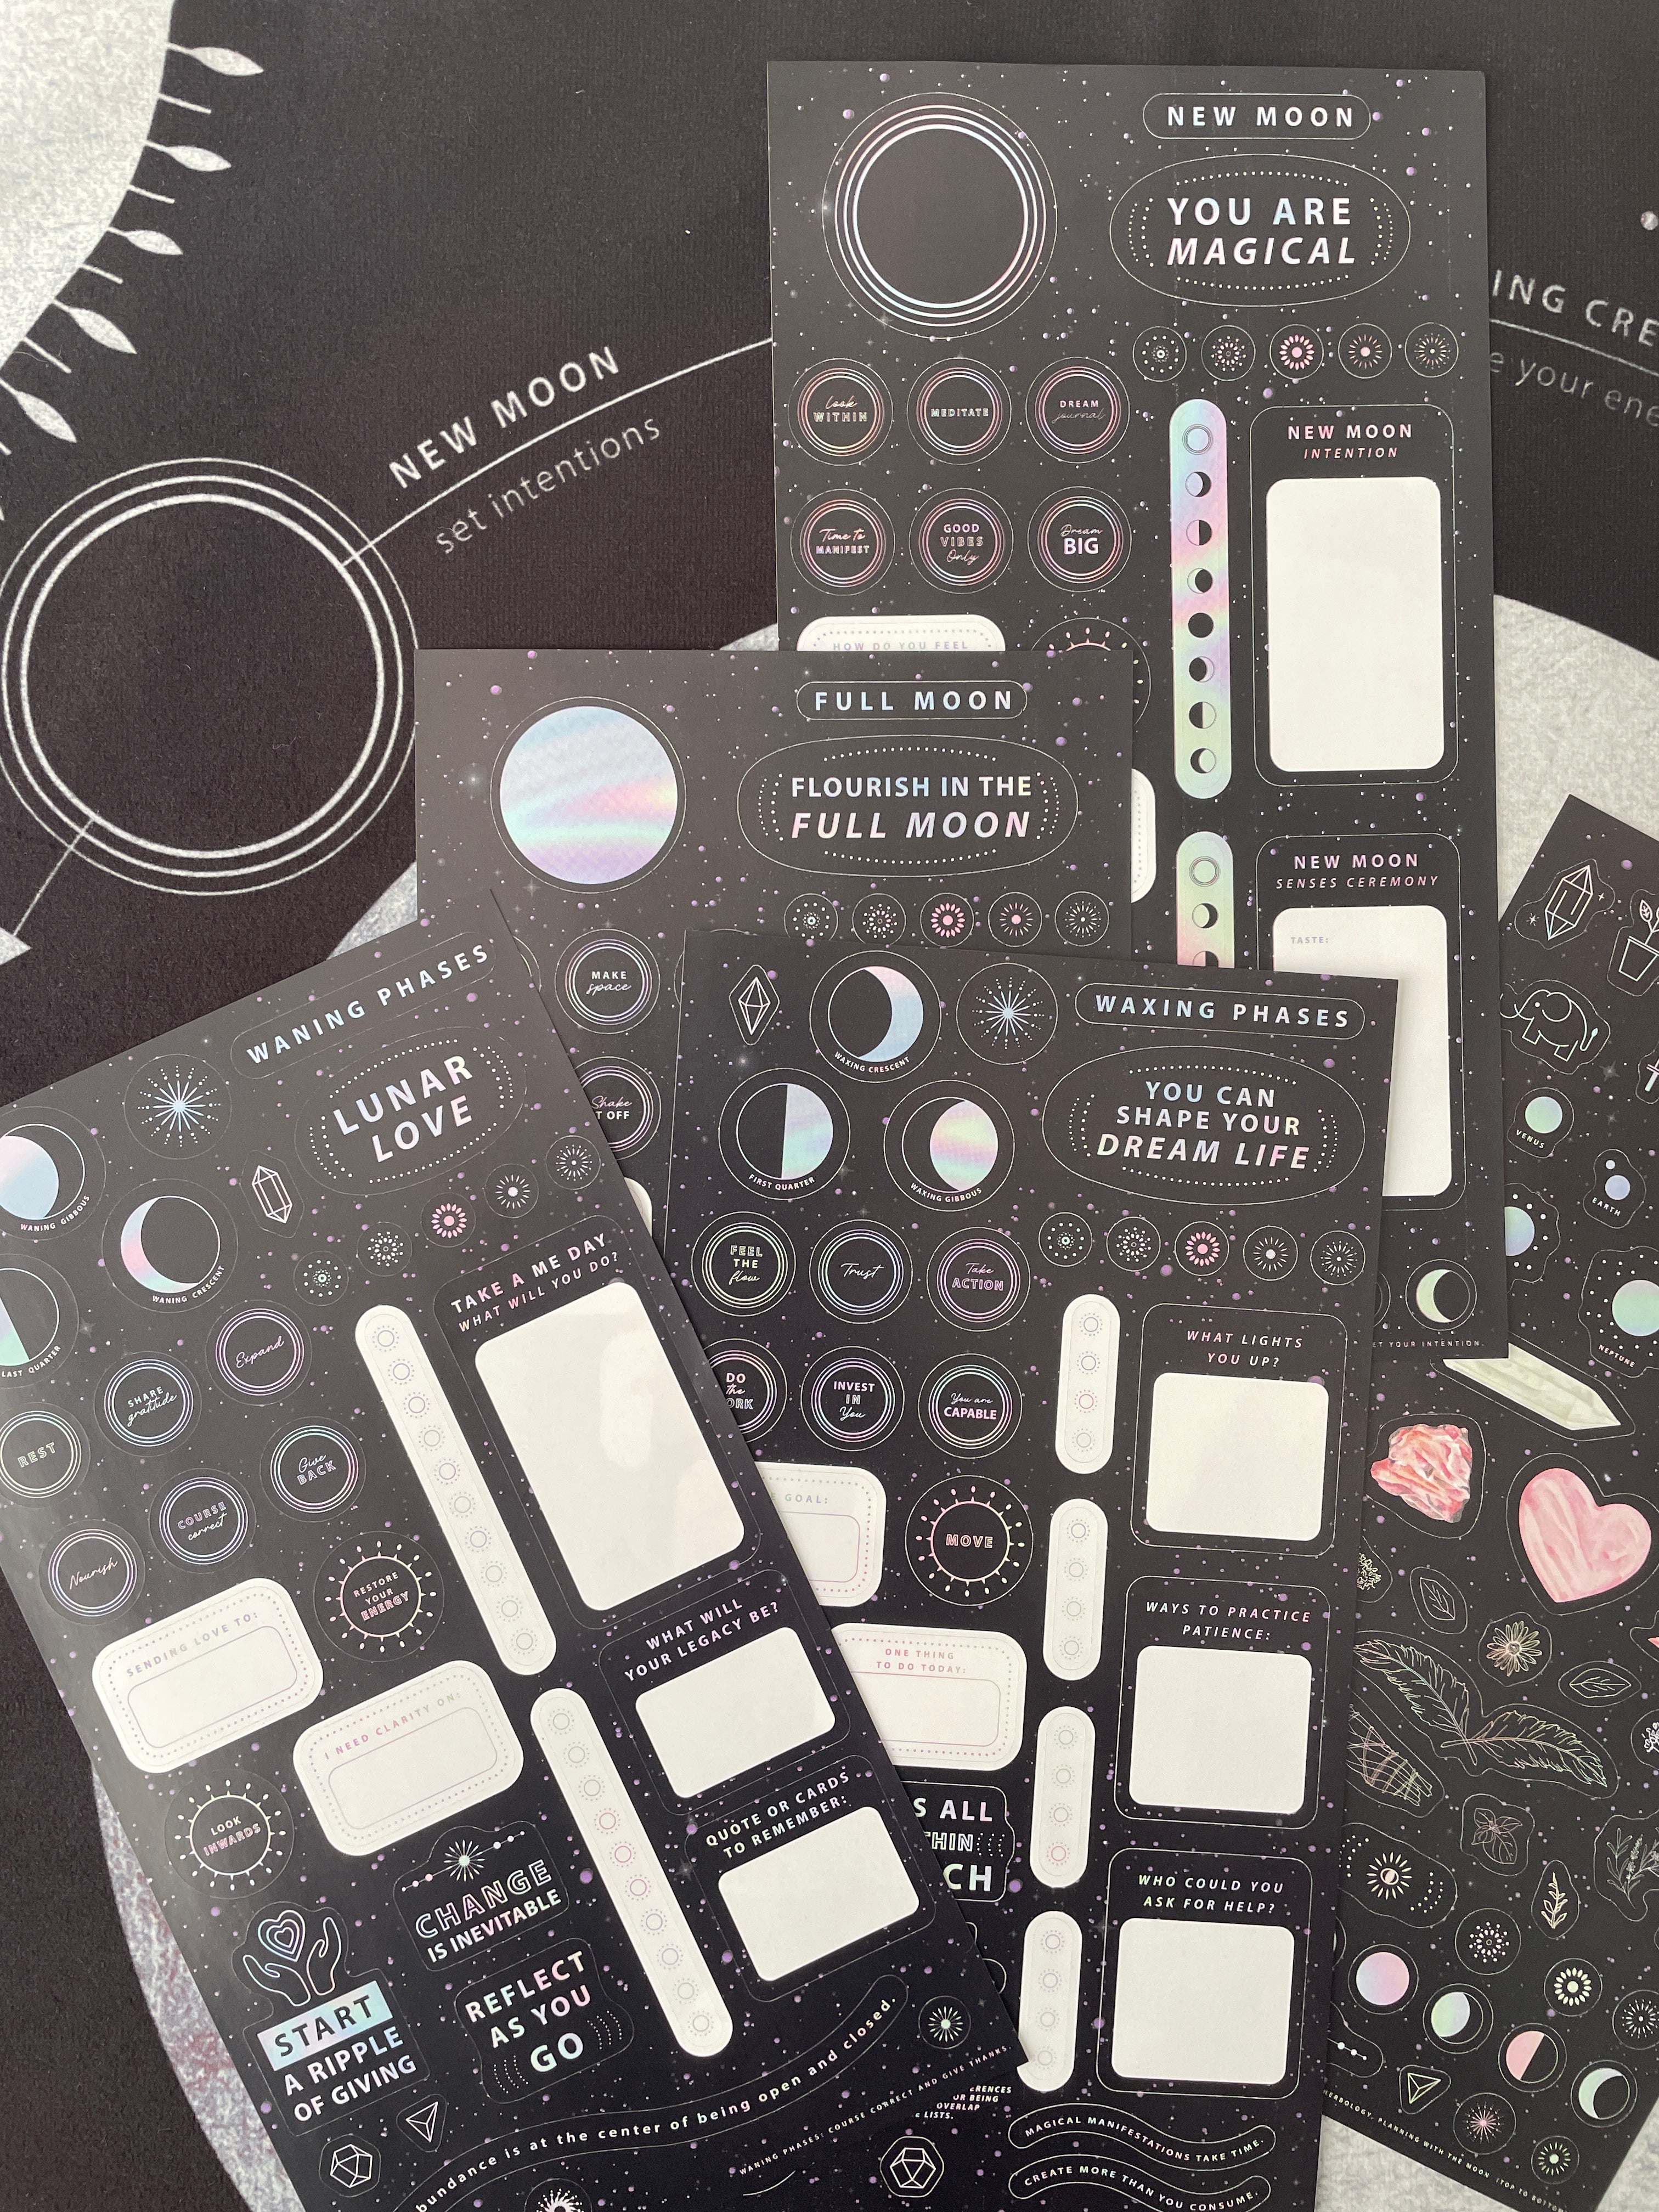 Mini Moon Phases Planner Stickers – aastrae